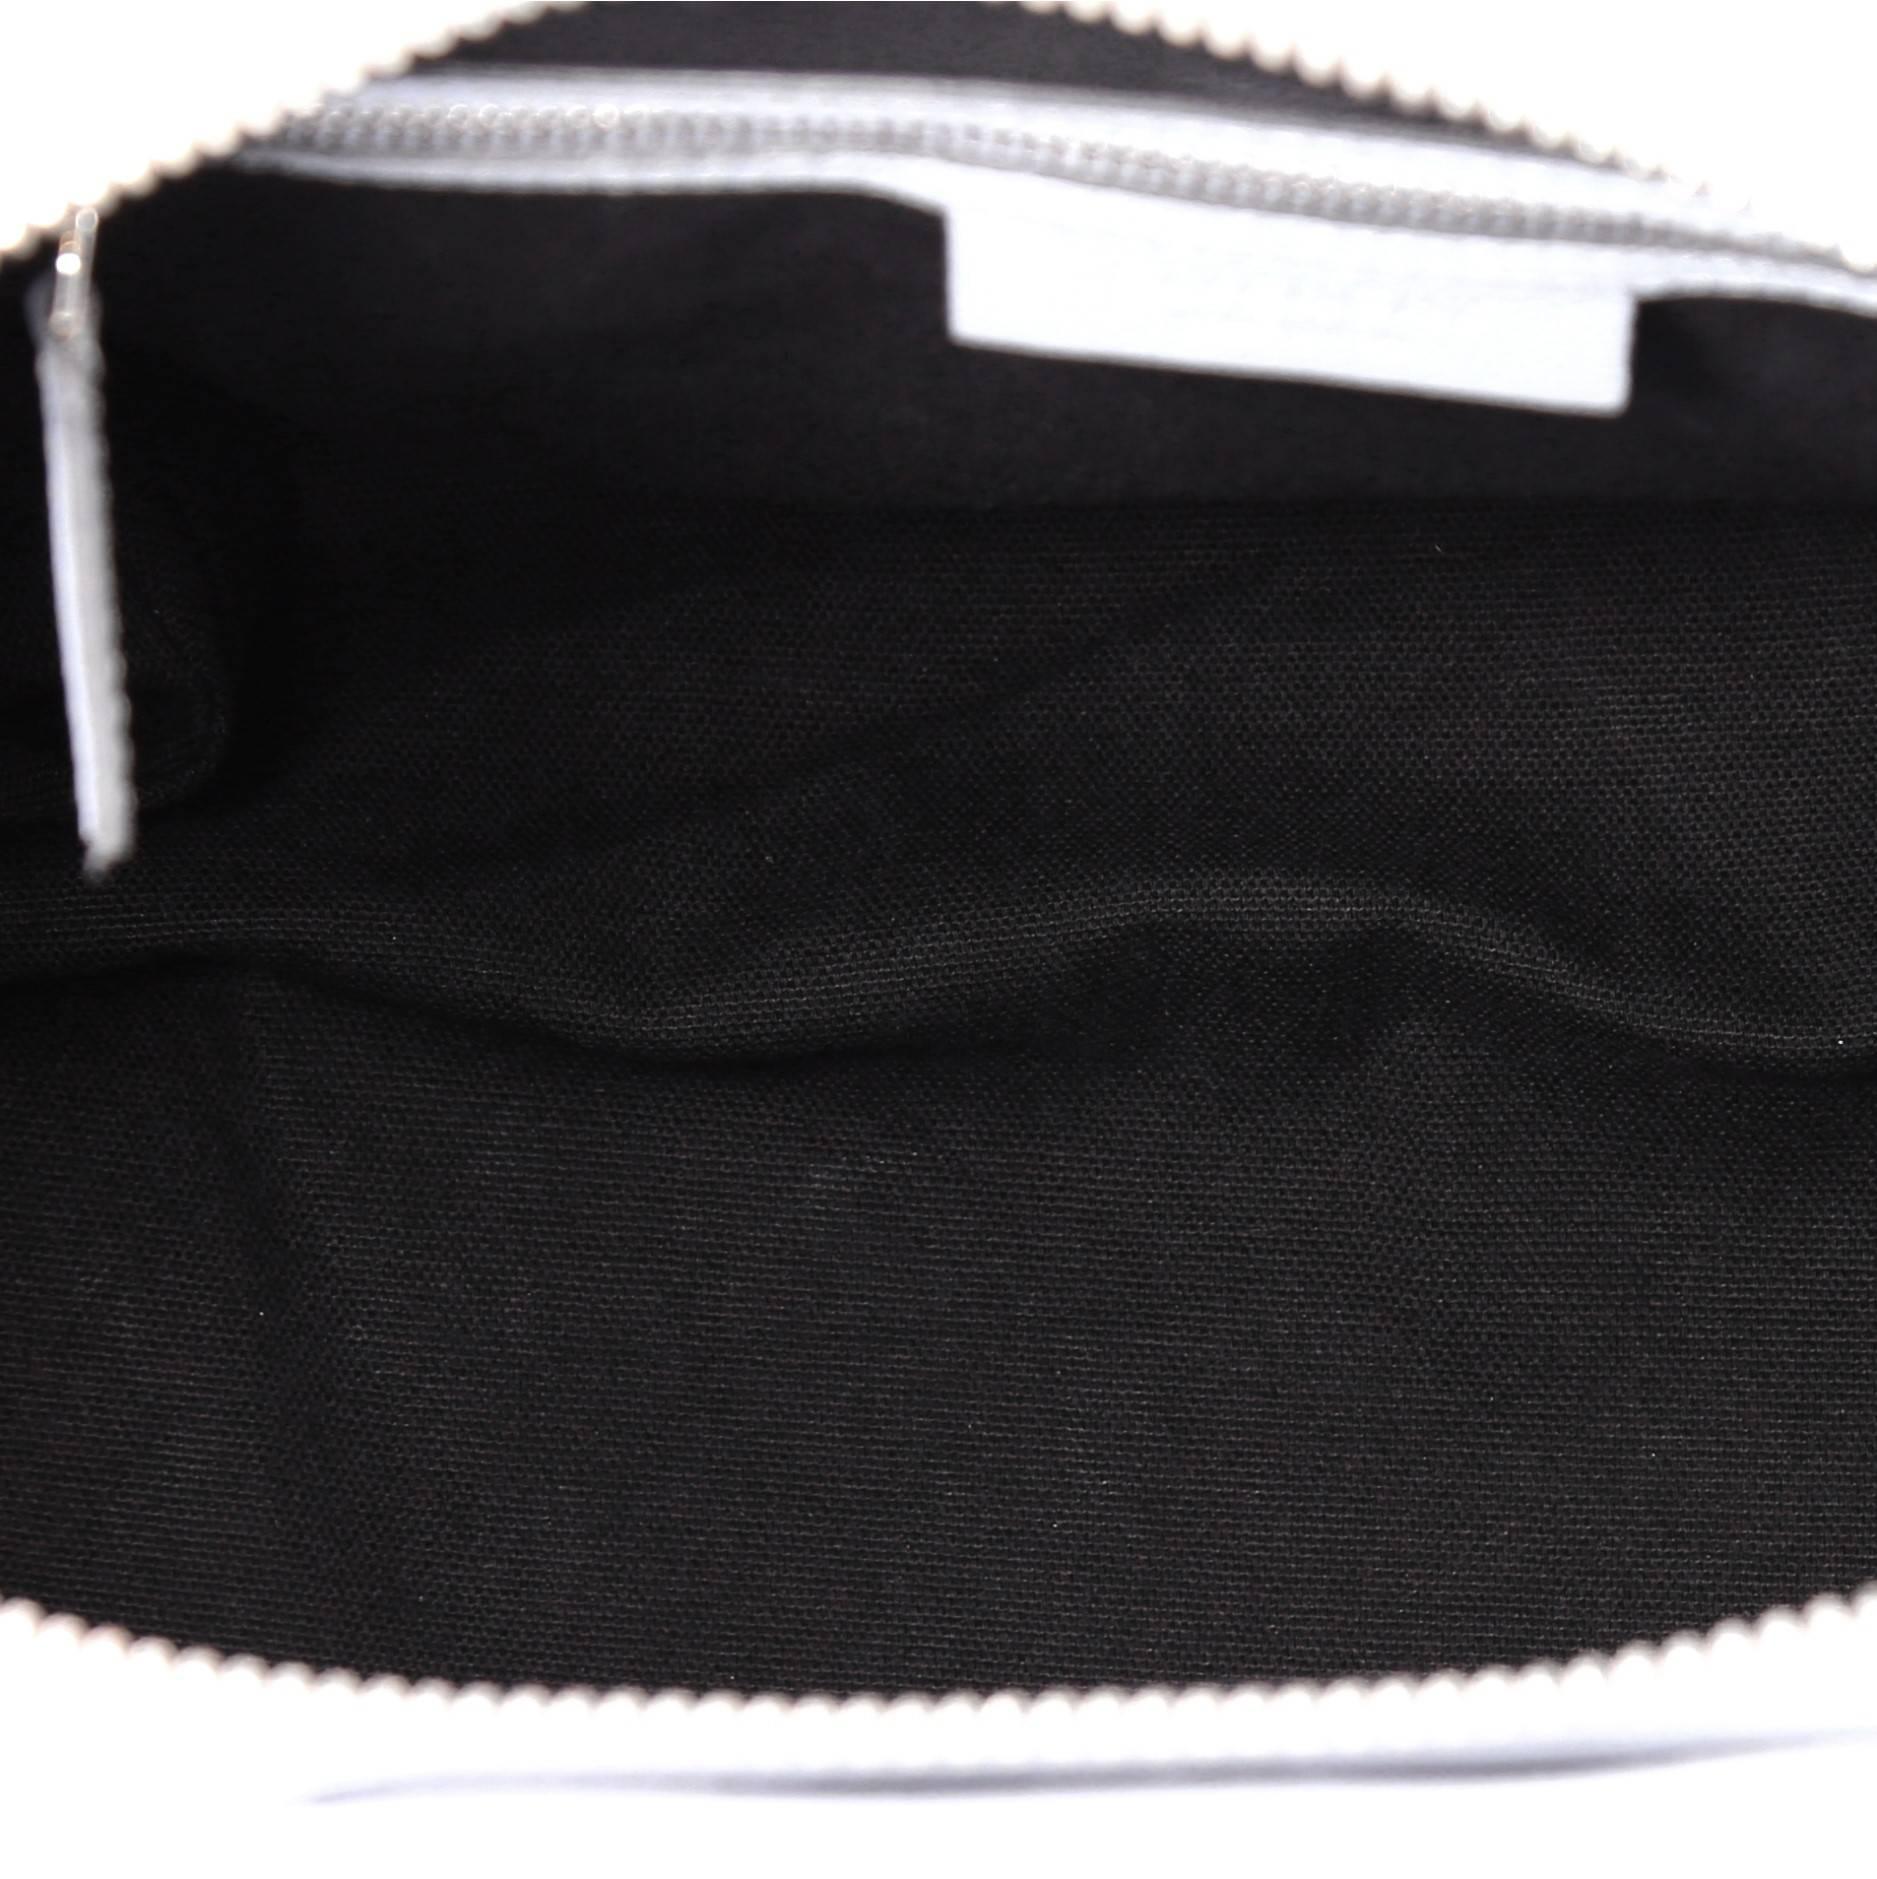 Givenchy Antigona Bag Leather Medium 2